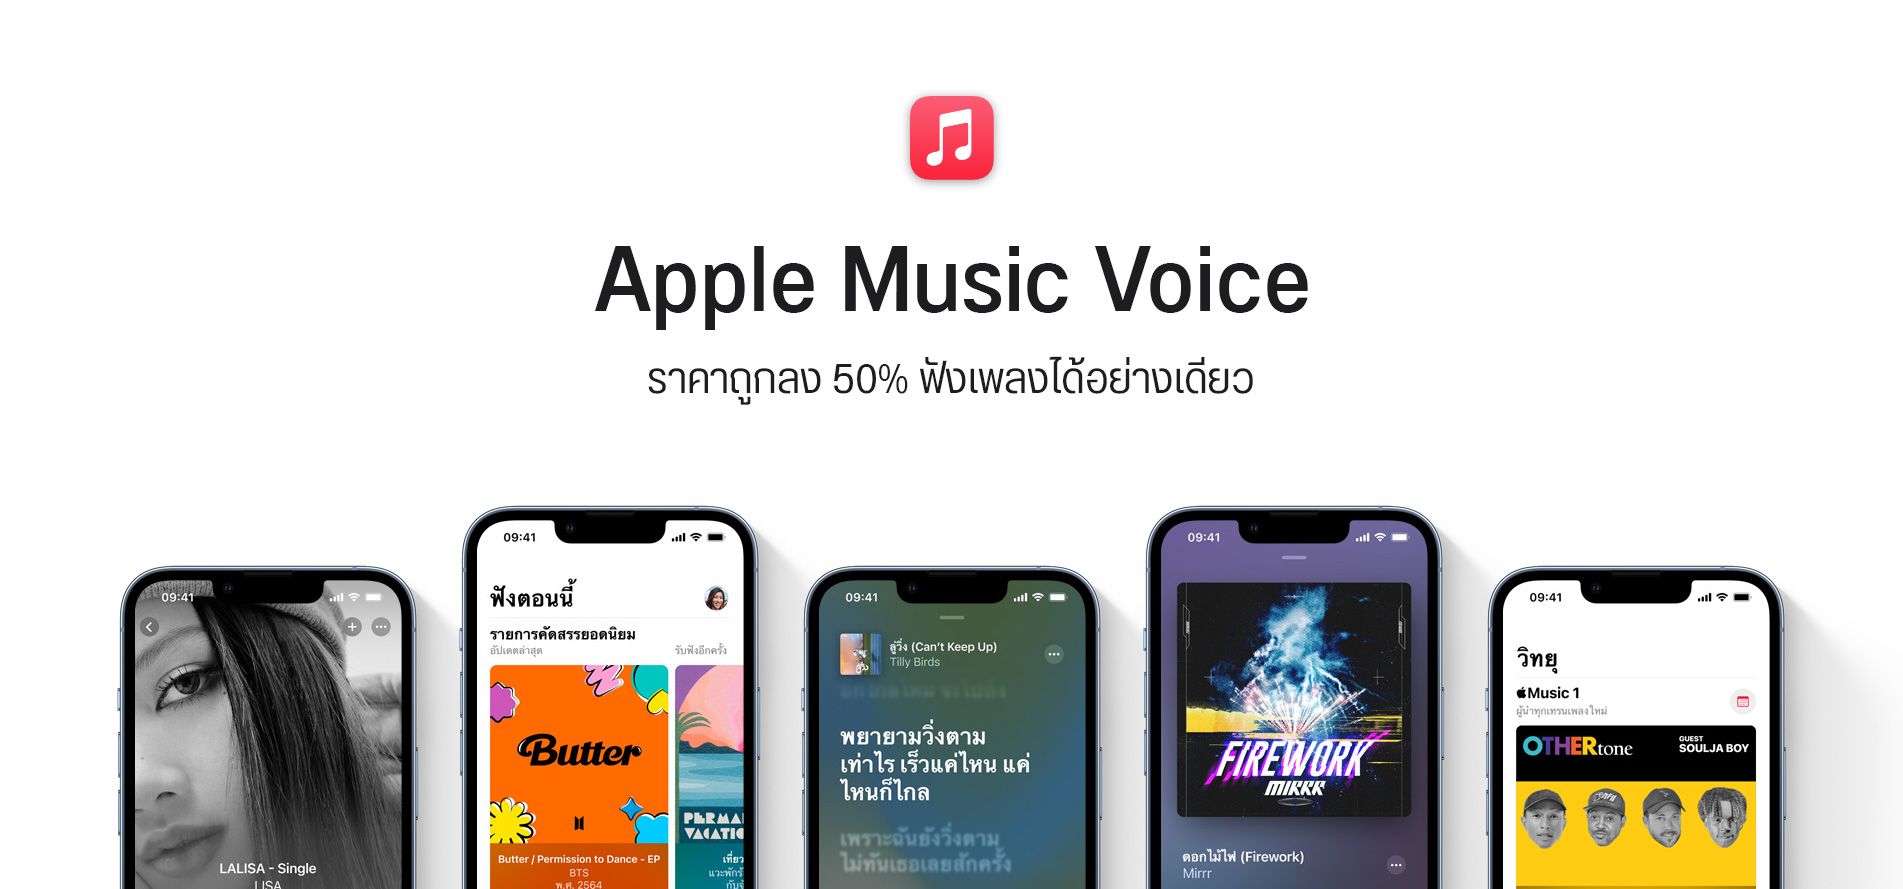 Apple Music เพิ่มแพ็กเกจใหม่ Voice Plan ราคาถูก 4.99 เหรียญต่อเดือน – ฟังเพลงได้อย่างเดียว ไม่มีเนื้อเพลงและวิดีโอ